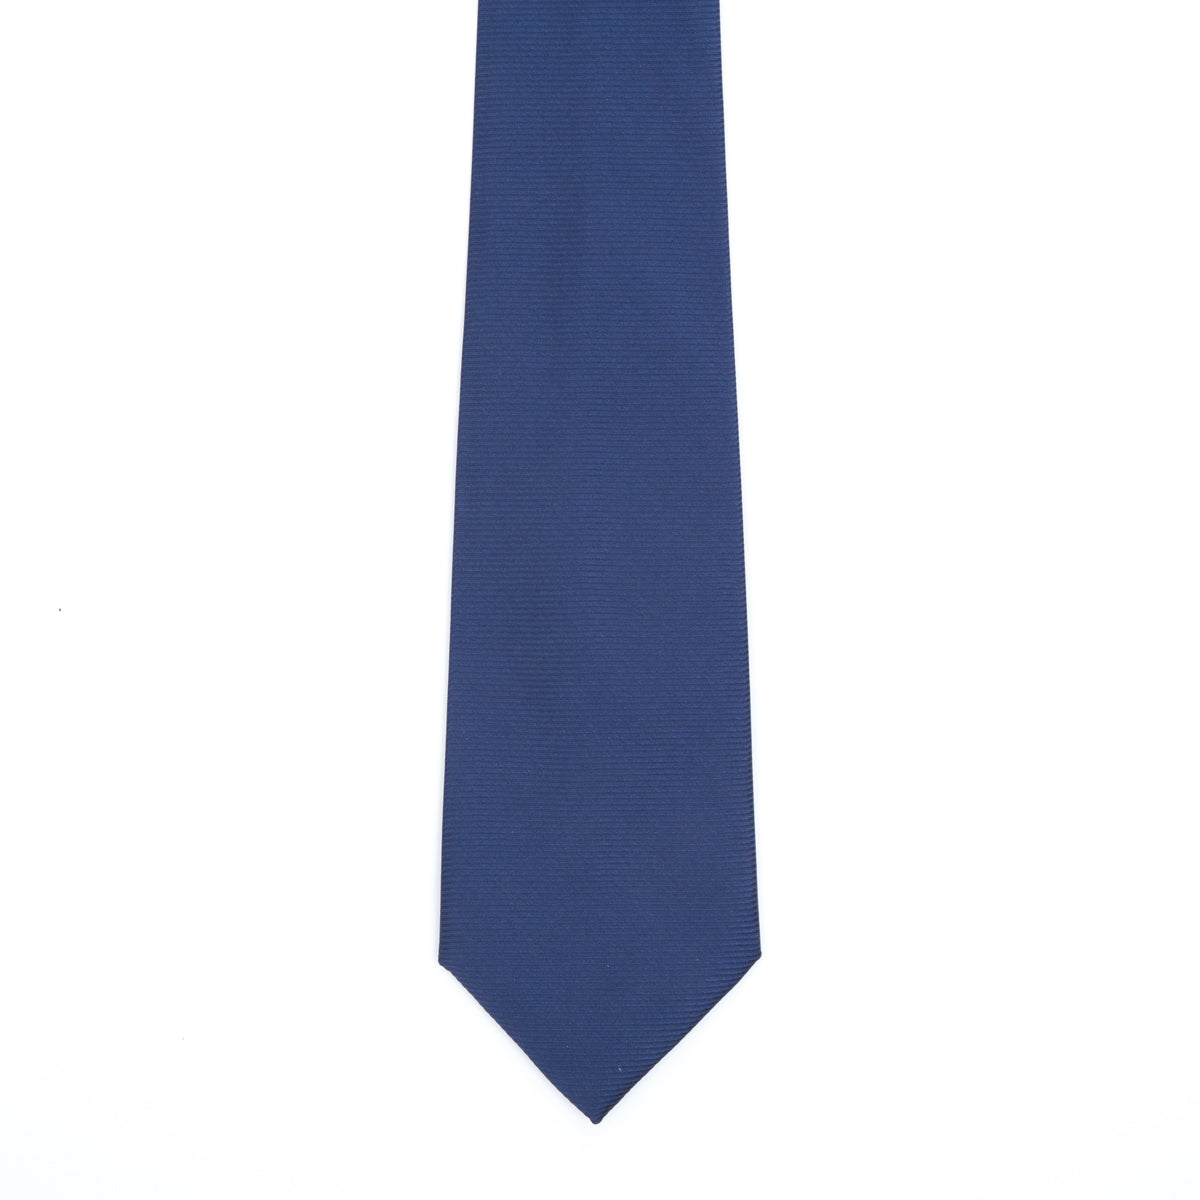 Admiral blue plain tie